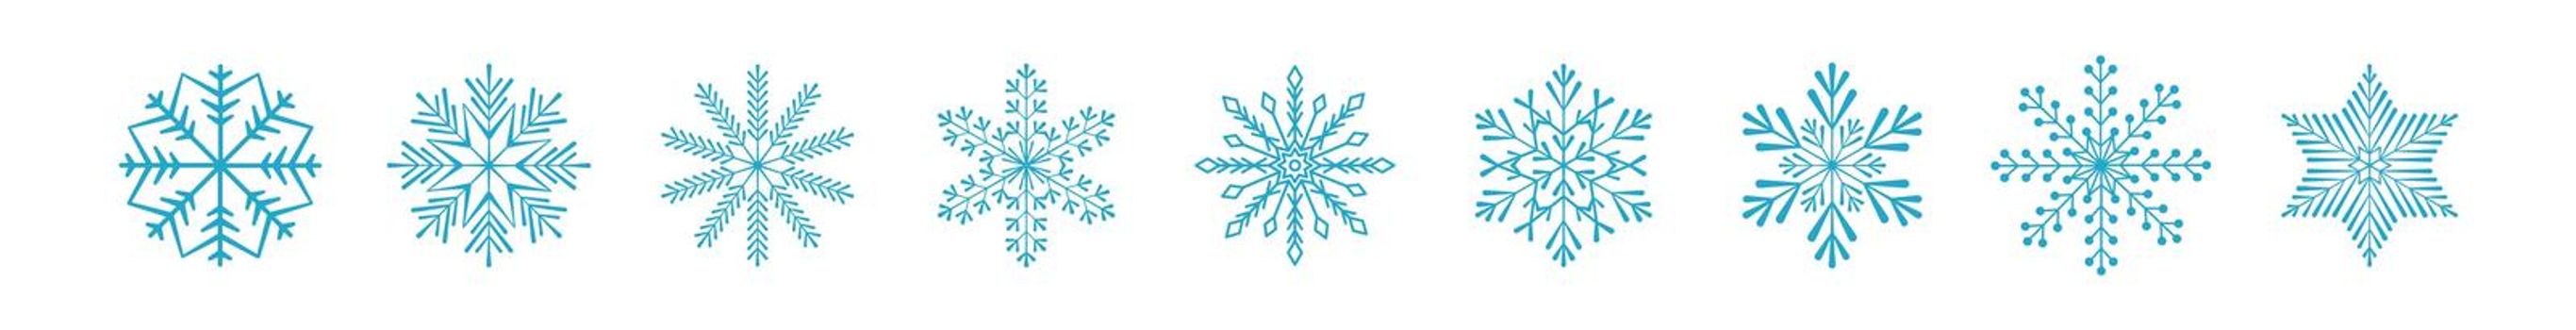 Frozen snowflake symbol collection vector illustration